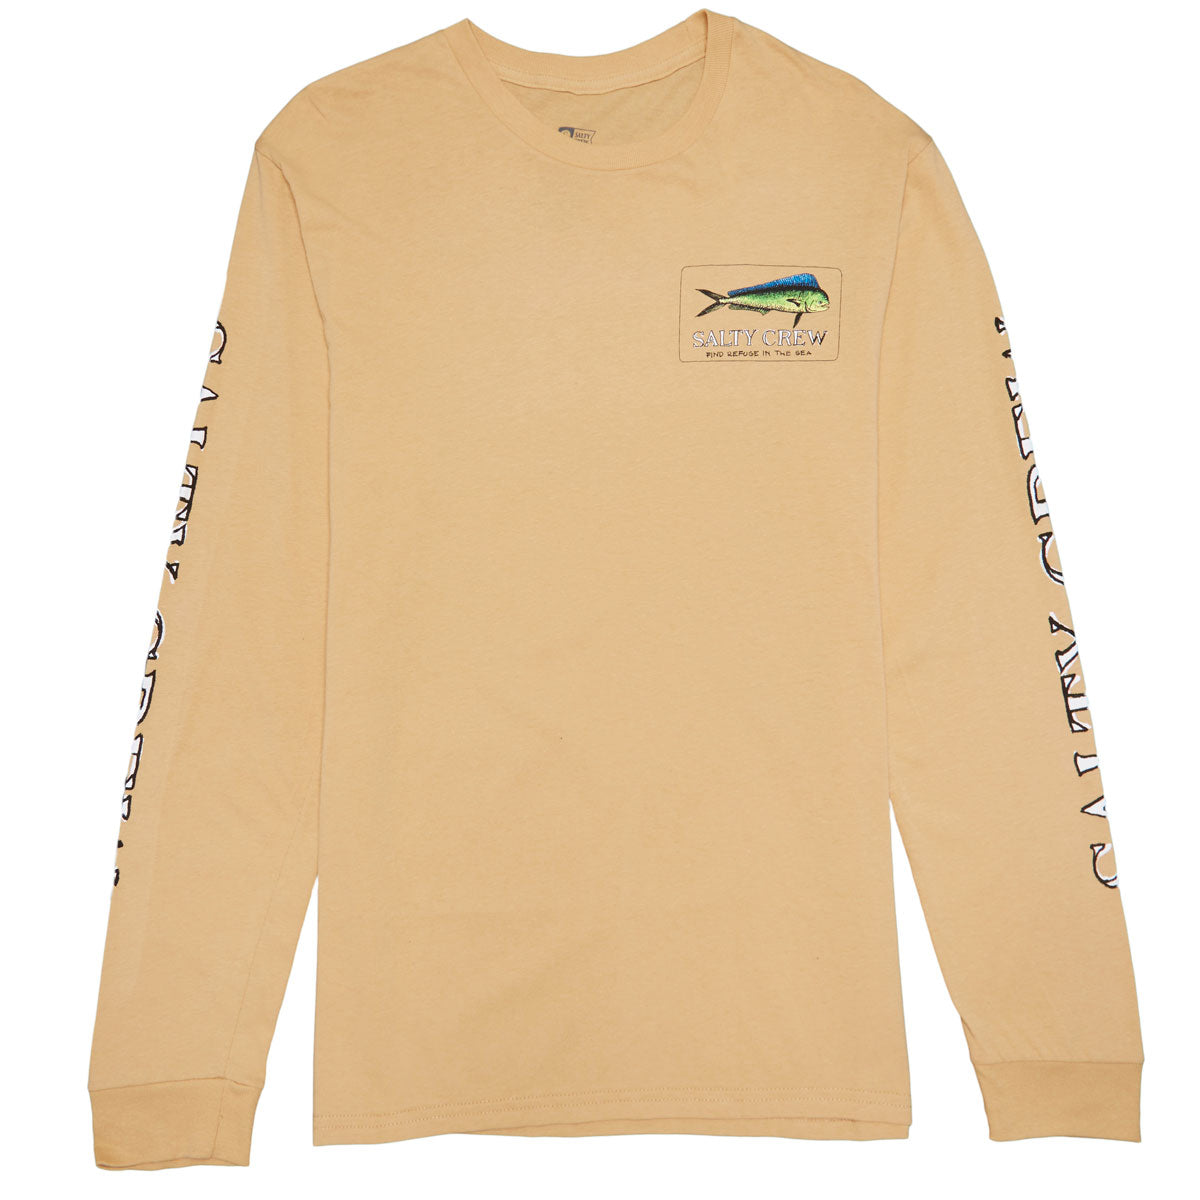 Salty Crew El Dorado Premium Long Sleeve T-Shirt - Camel image 2